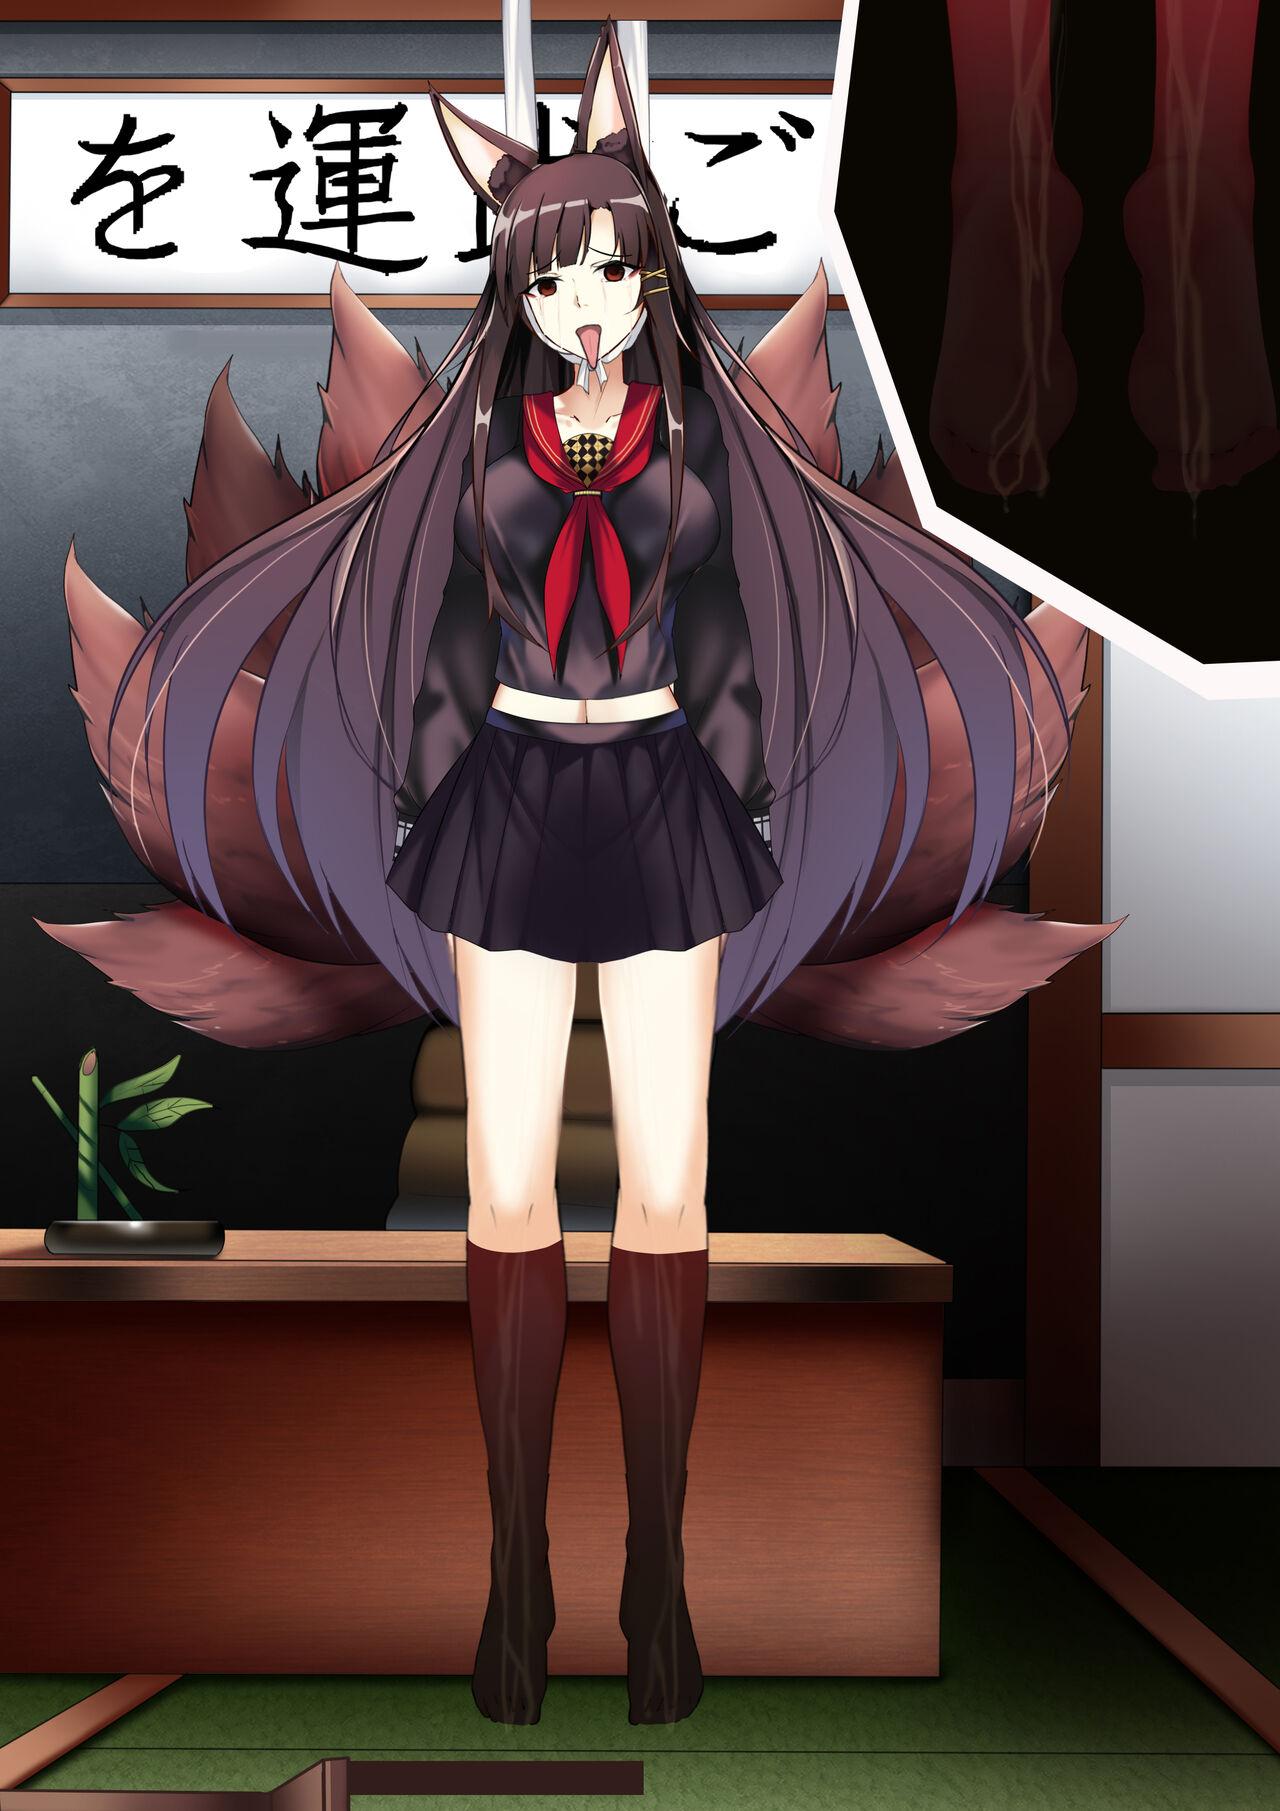 Akagi hanged herself in her office 120